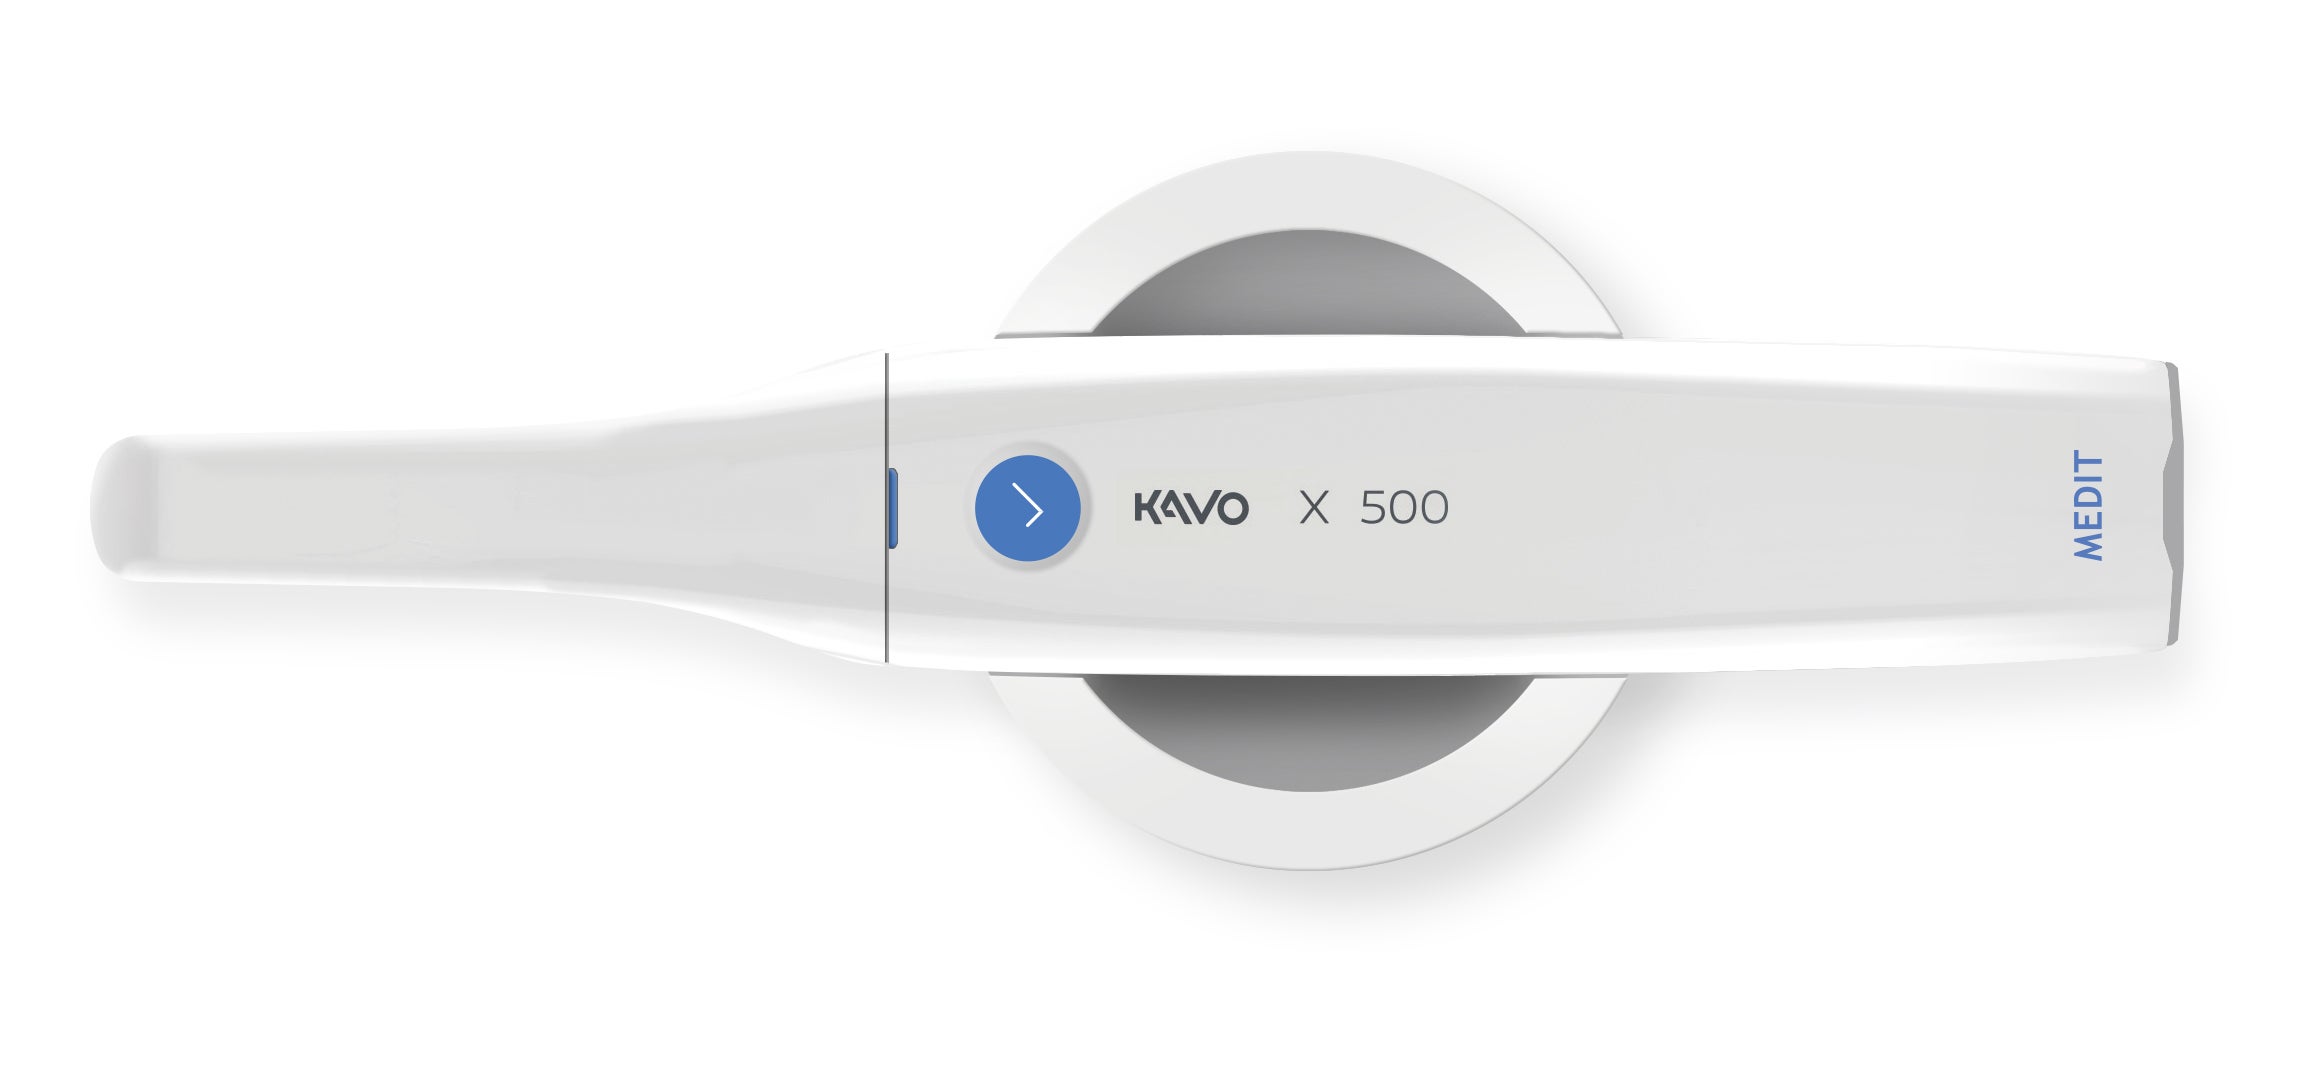 KaVo X 500 Scanner System